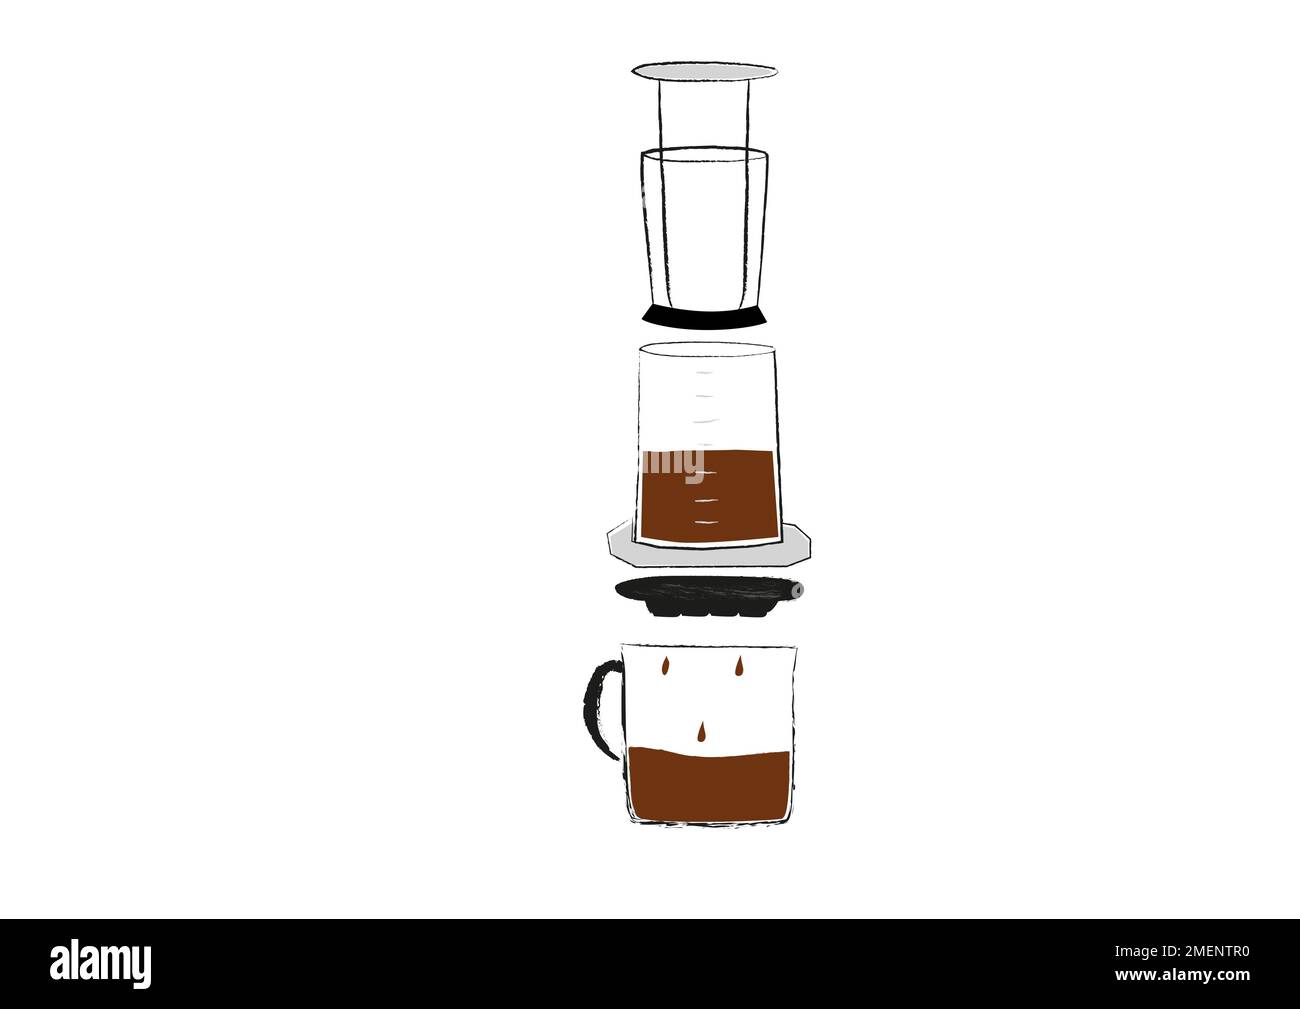 Illustration of aeropress coffee maker Stock Photo